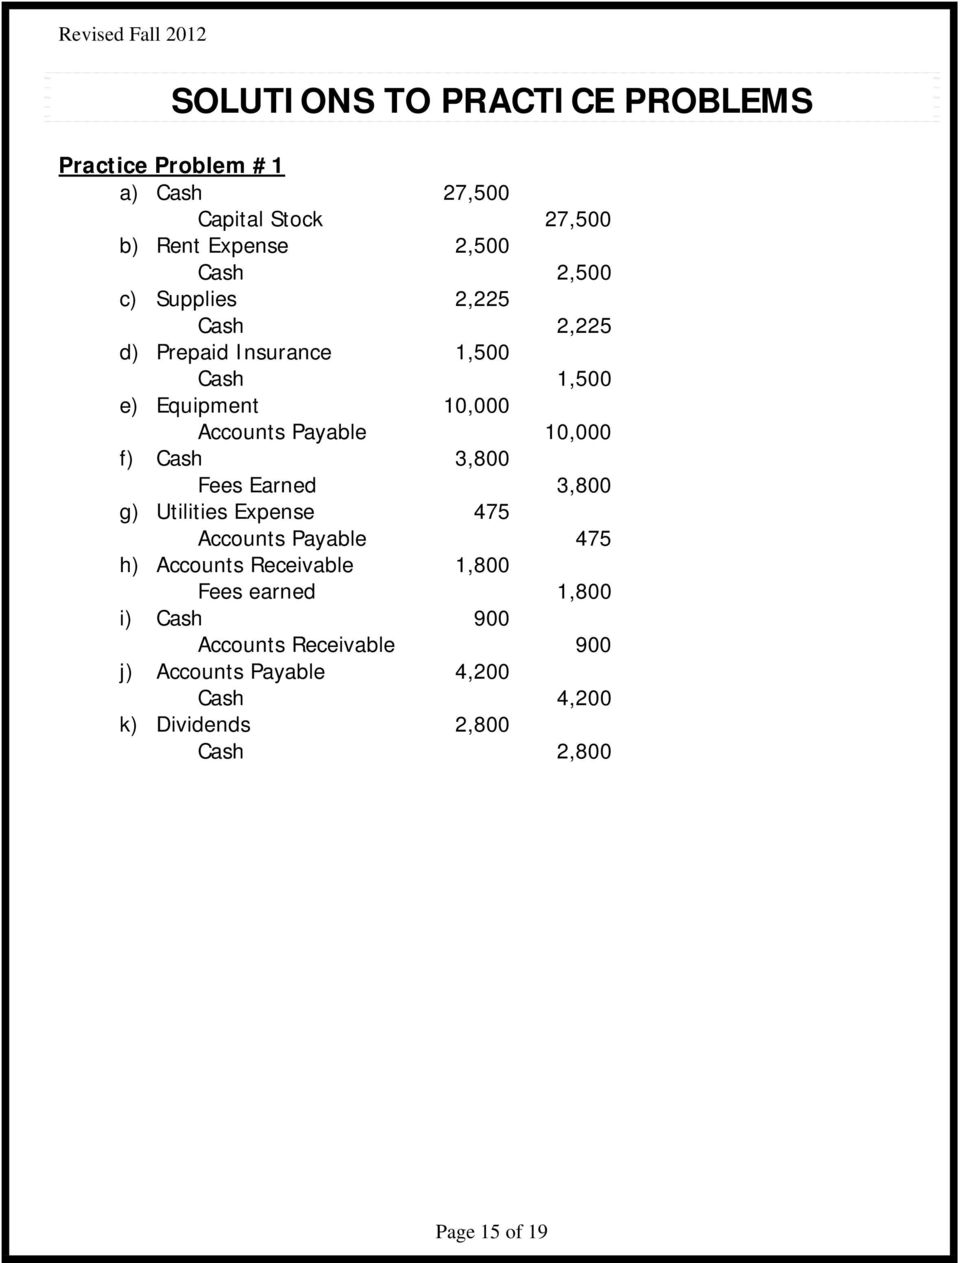 f) Cash 3,800 Fees Earned 3,800 g) Utilities Expense 475 Accounts Payable 475 h) Accounts Receivable 1,800 Fees